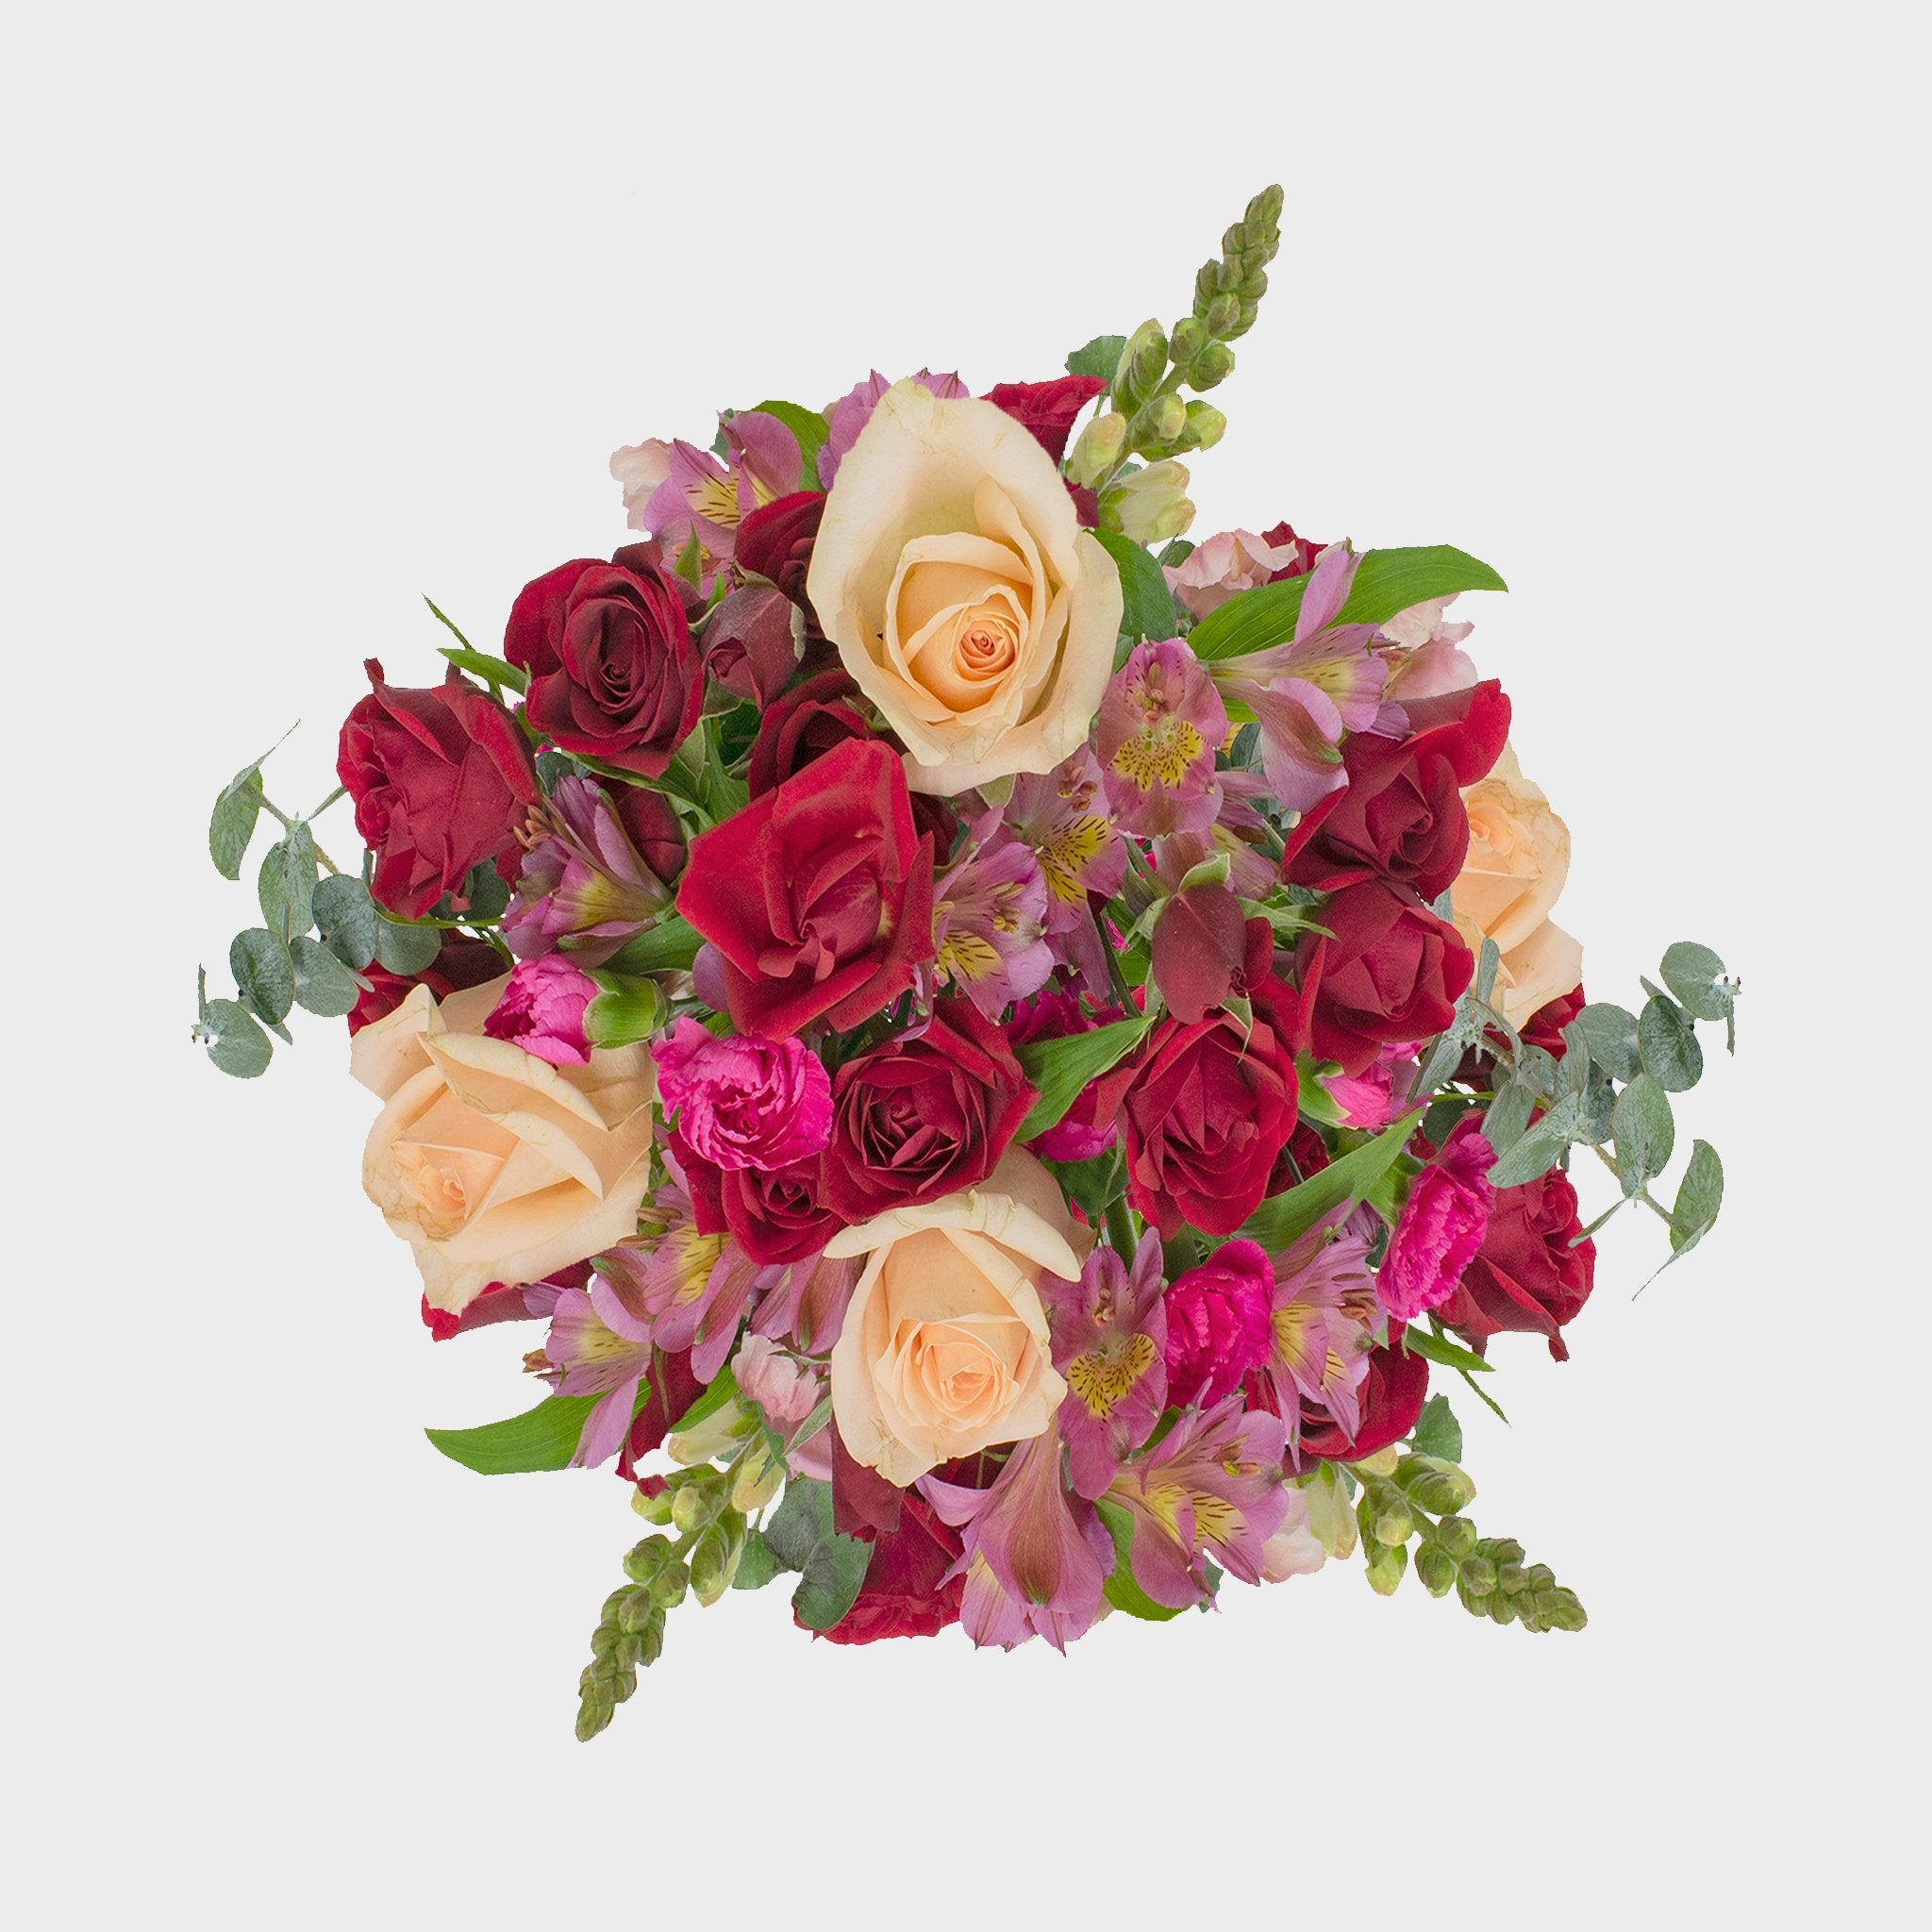 Rojo, thanksgiving flower arrangements - La Florela